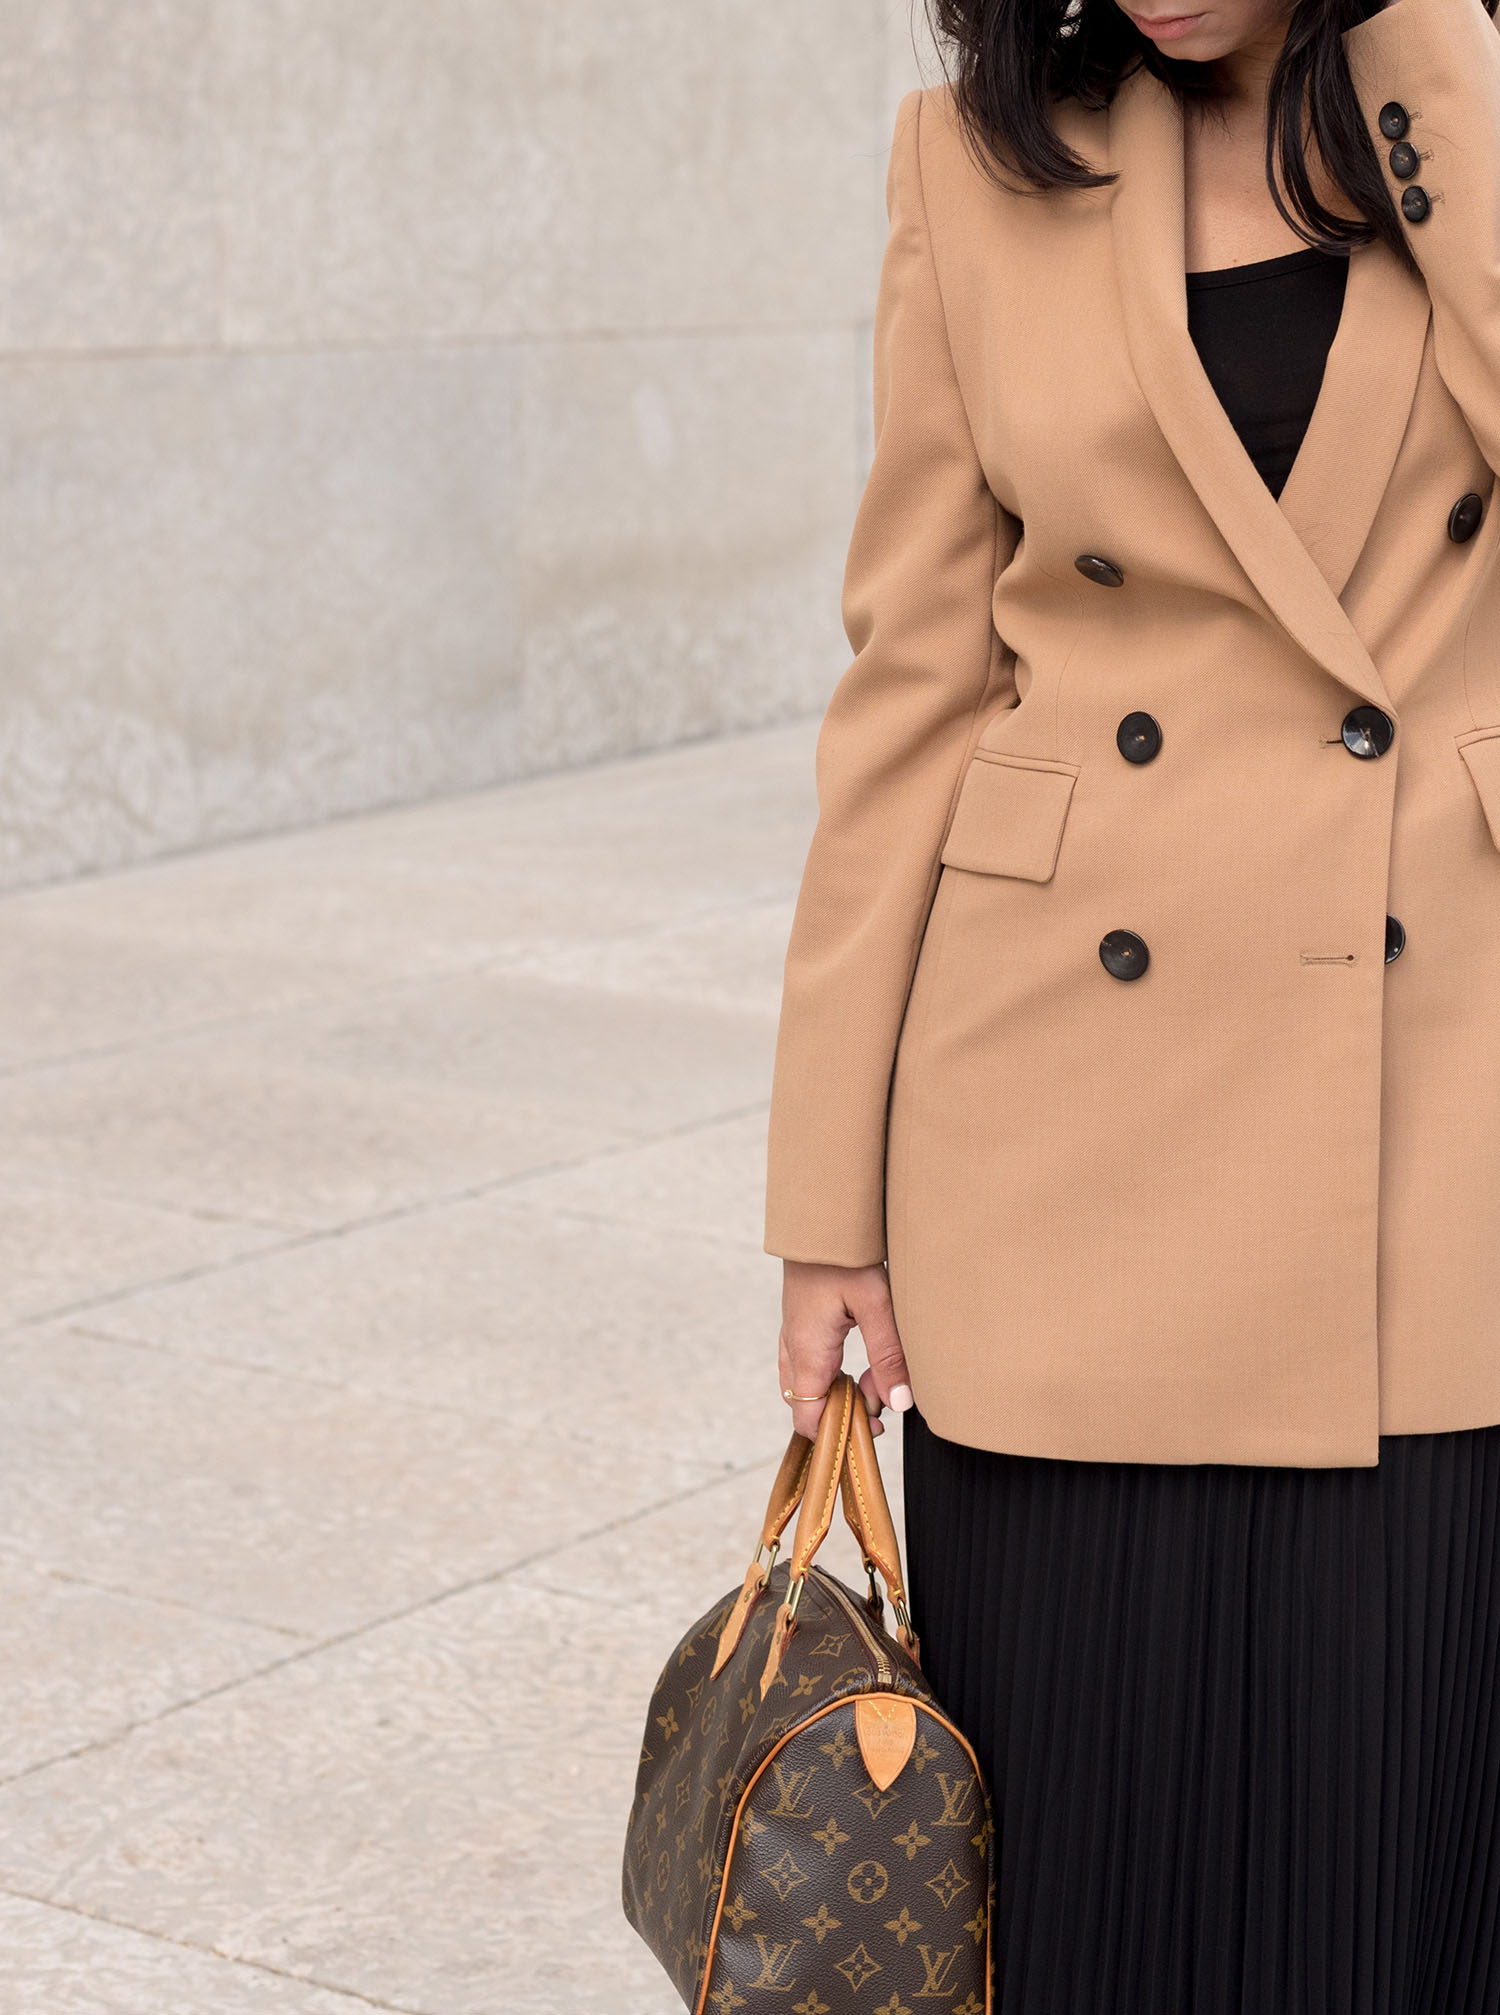 Coco & Vera - Louis Vuitton handbag, Zara camel blazer, Oak + Fort top